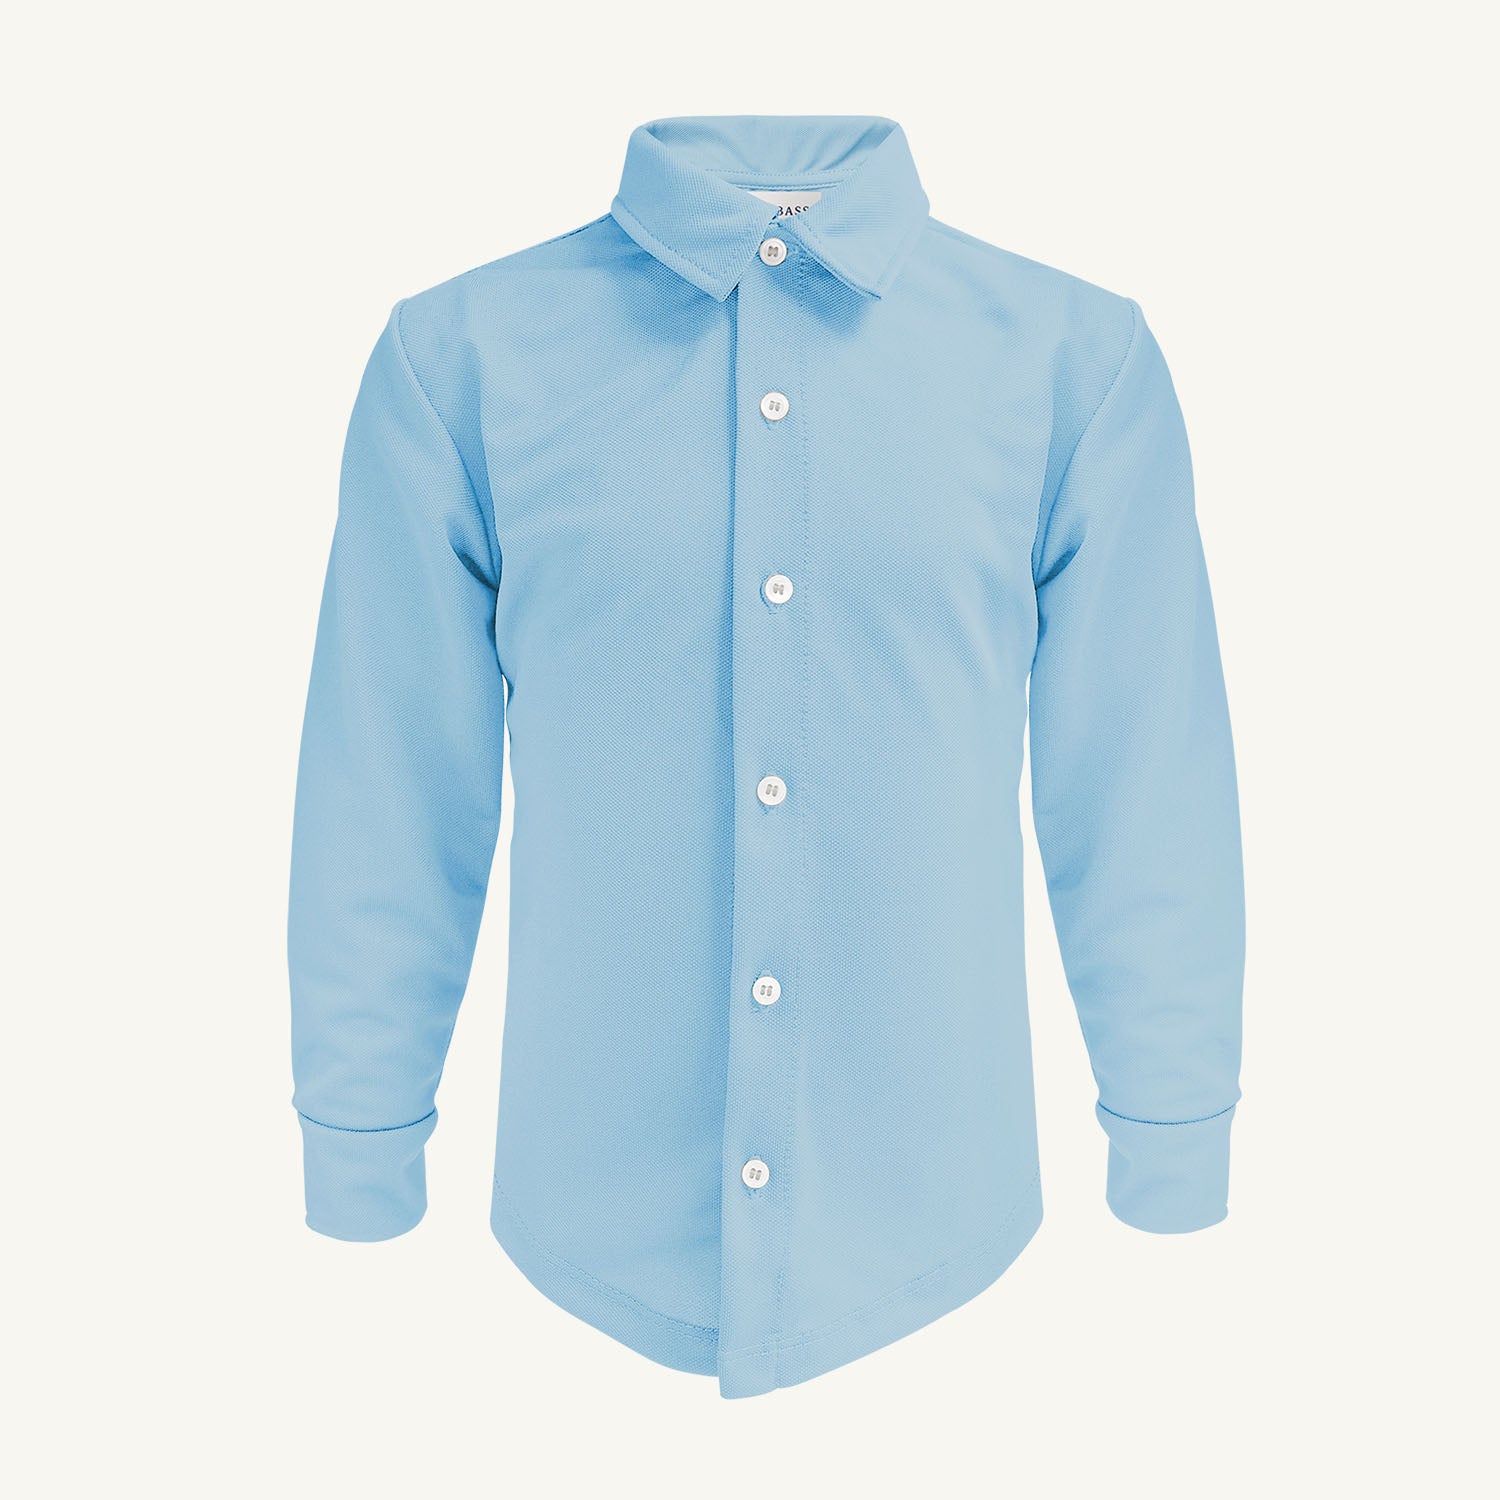 Camisa de manga larga con protección UV (UPF 50+) - Clearwater Blue Hombre